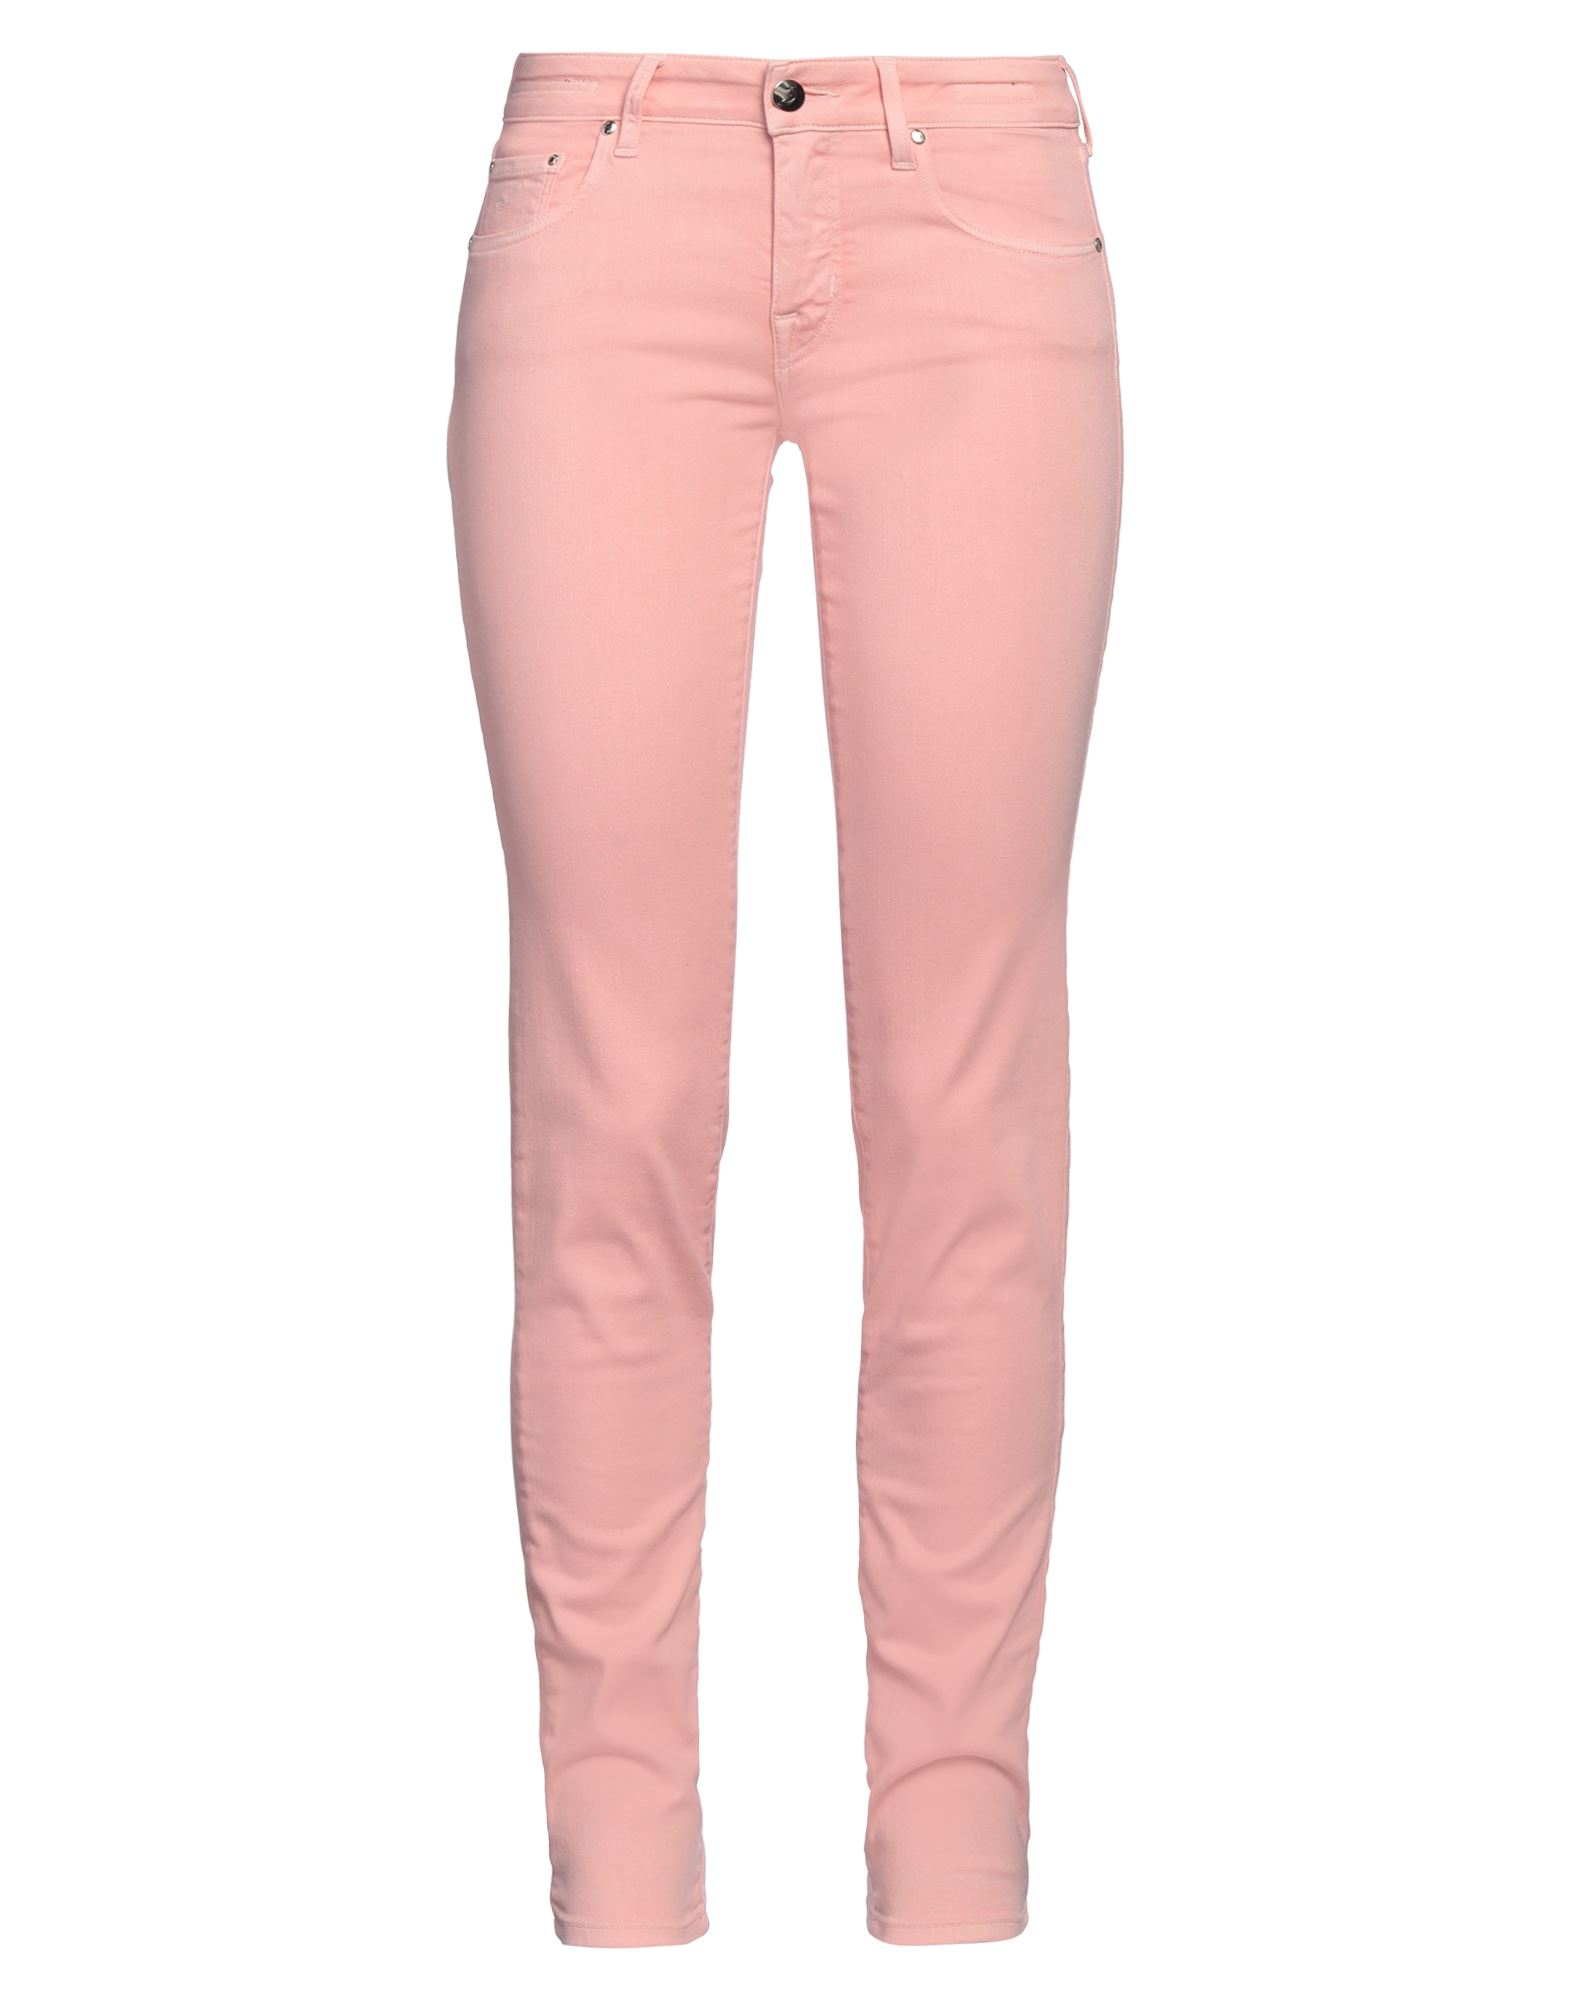 Jacob Cohёn Woman Jeans Pink Size 25 Cotton, Polyester, Elastane